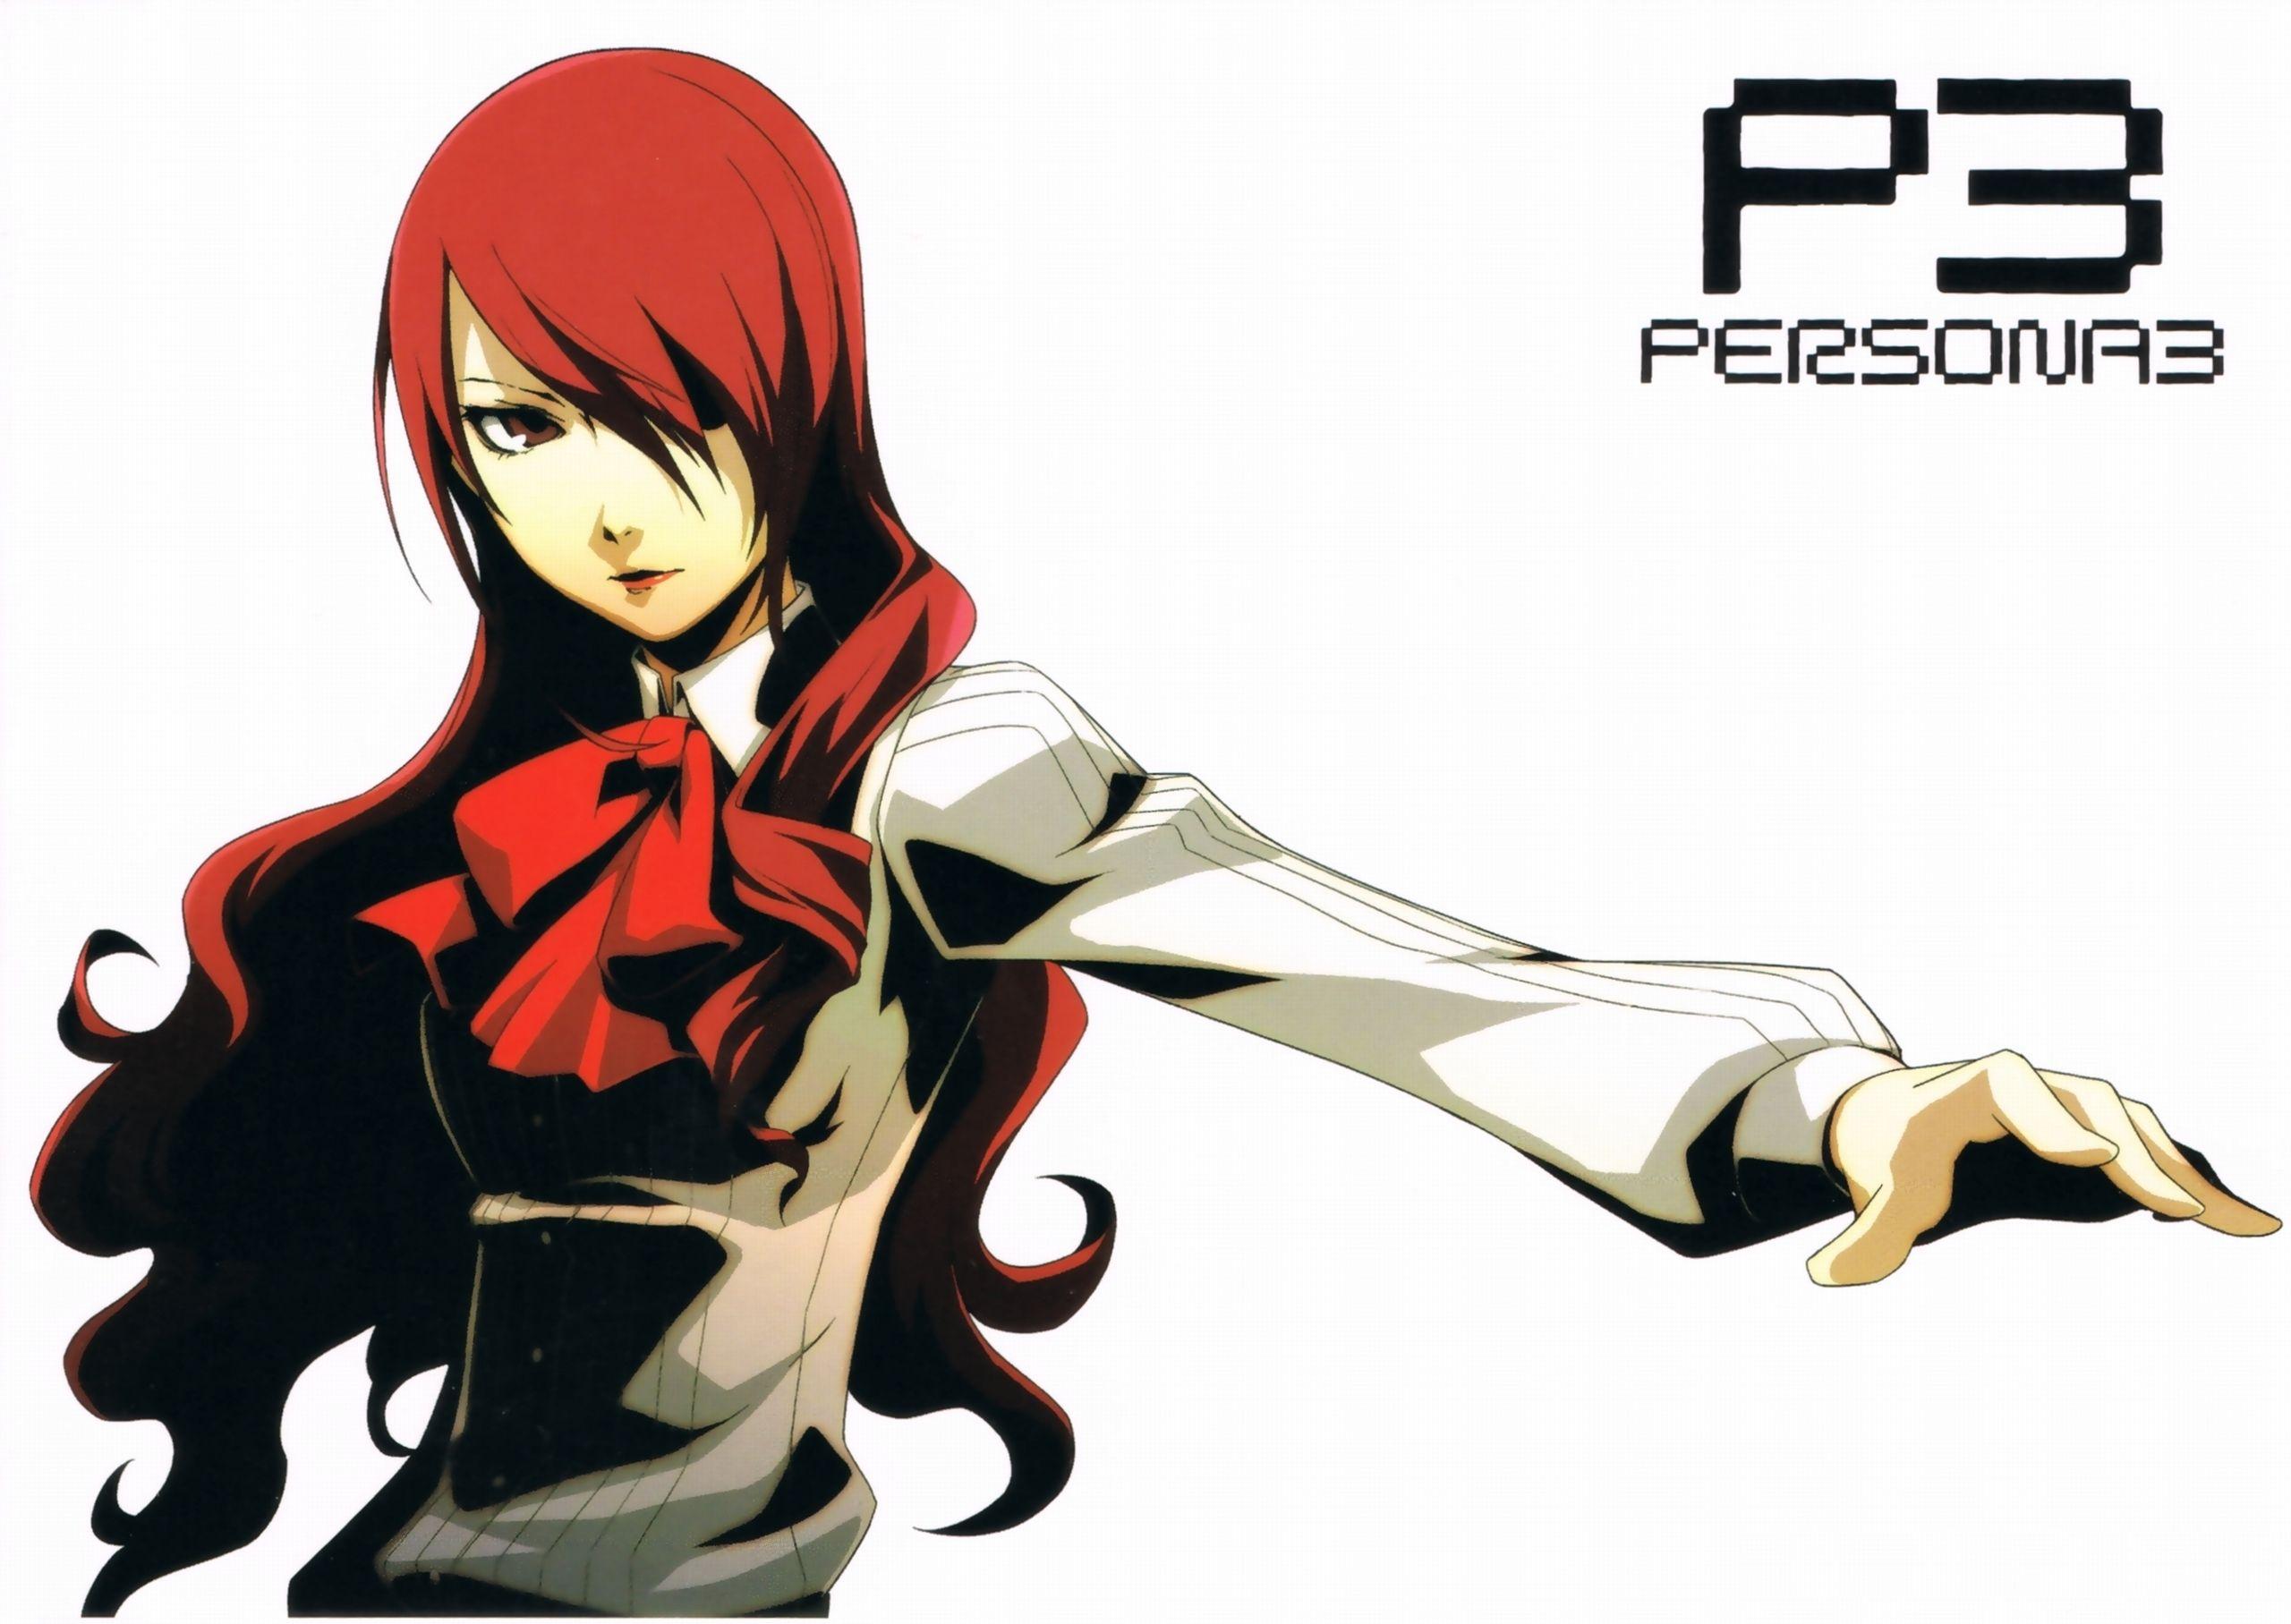 Mitsuru Persona 3 Wallpapers - Top Free Mitsuru Persona 3 Backgrounds